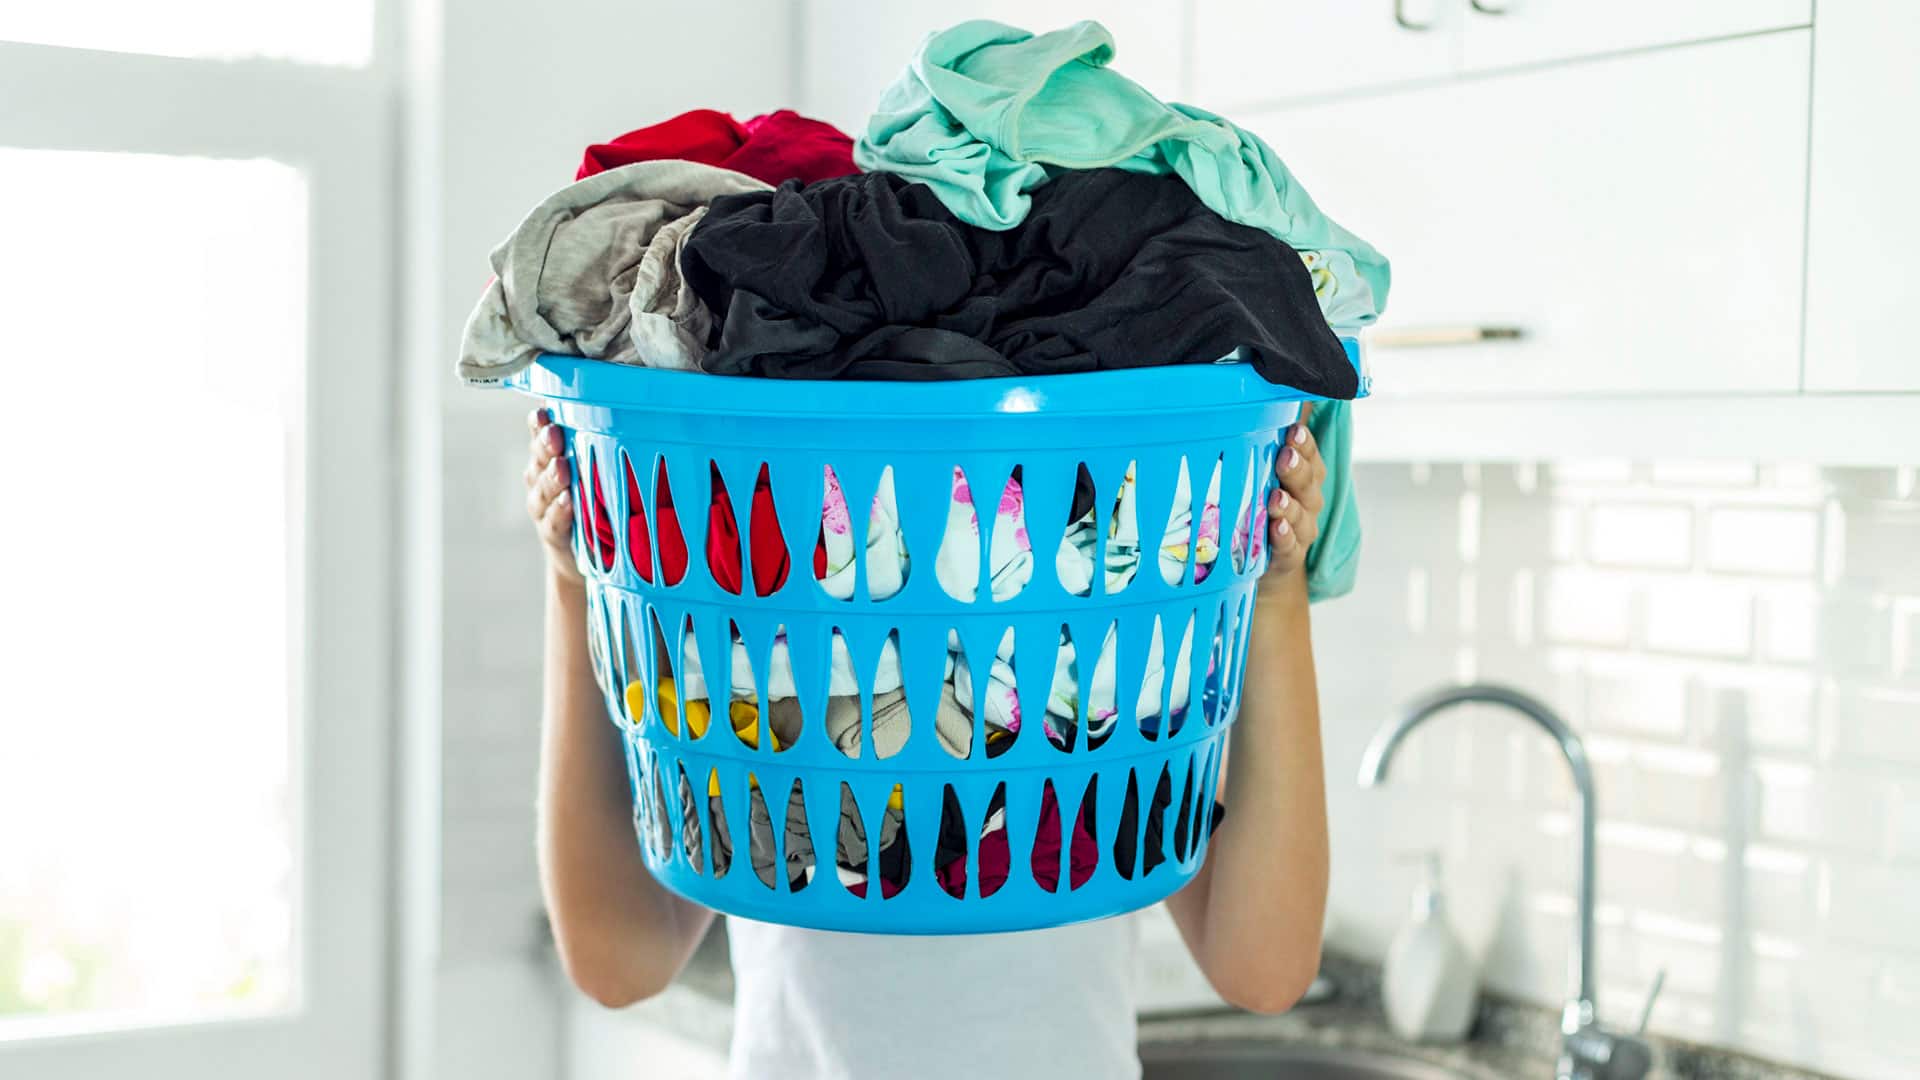 woman holding laundry basket in laundry machine